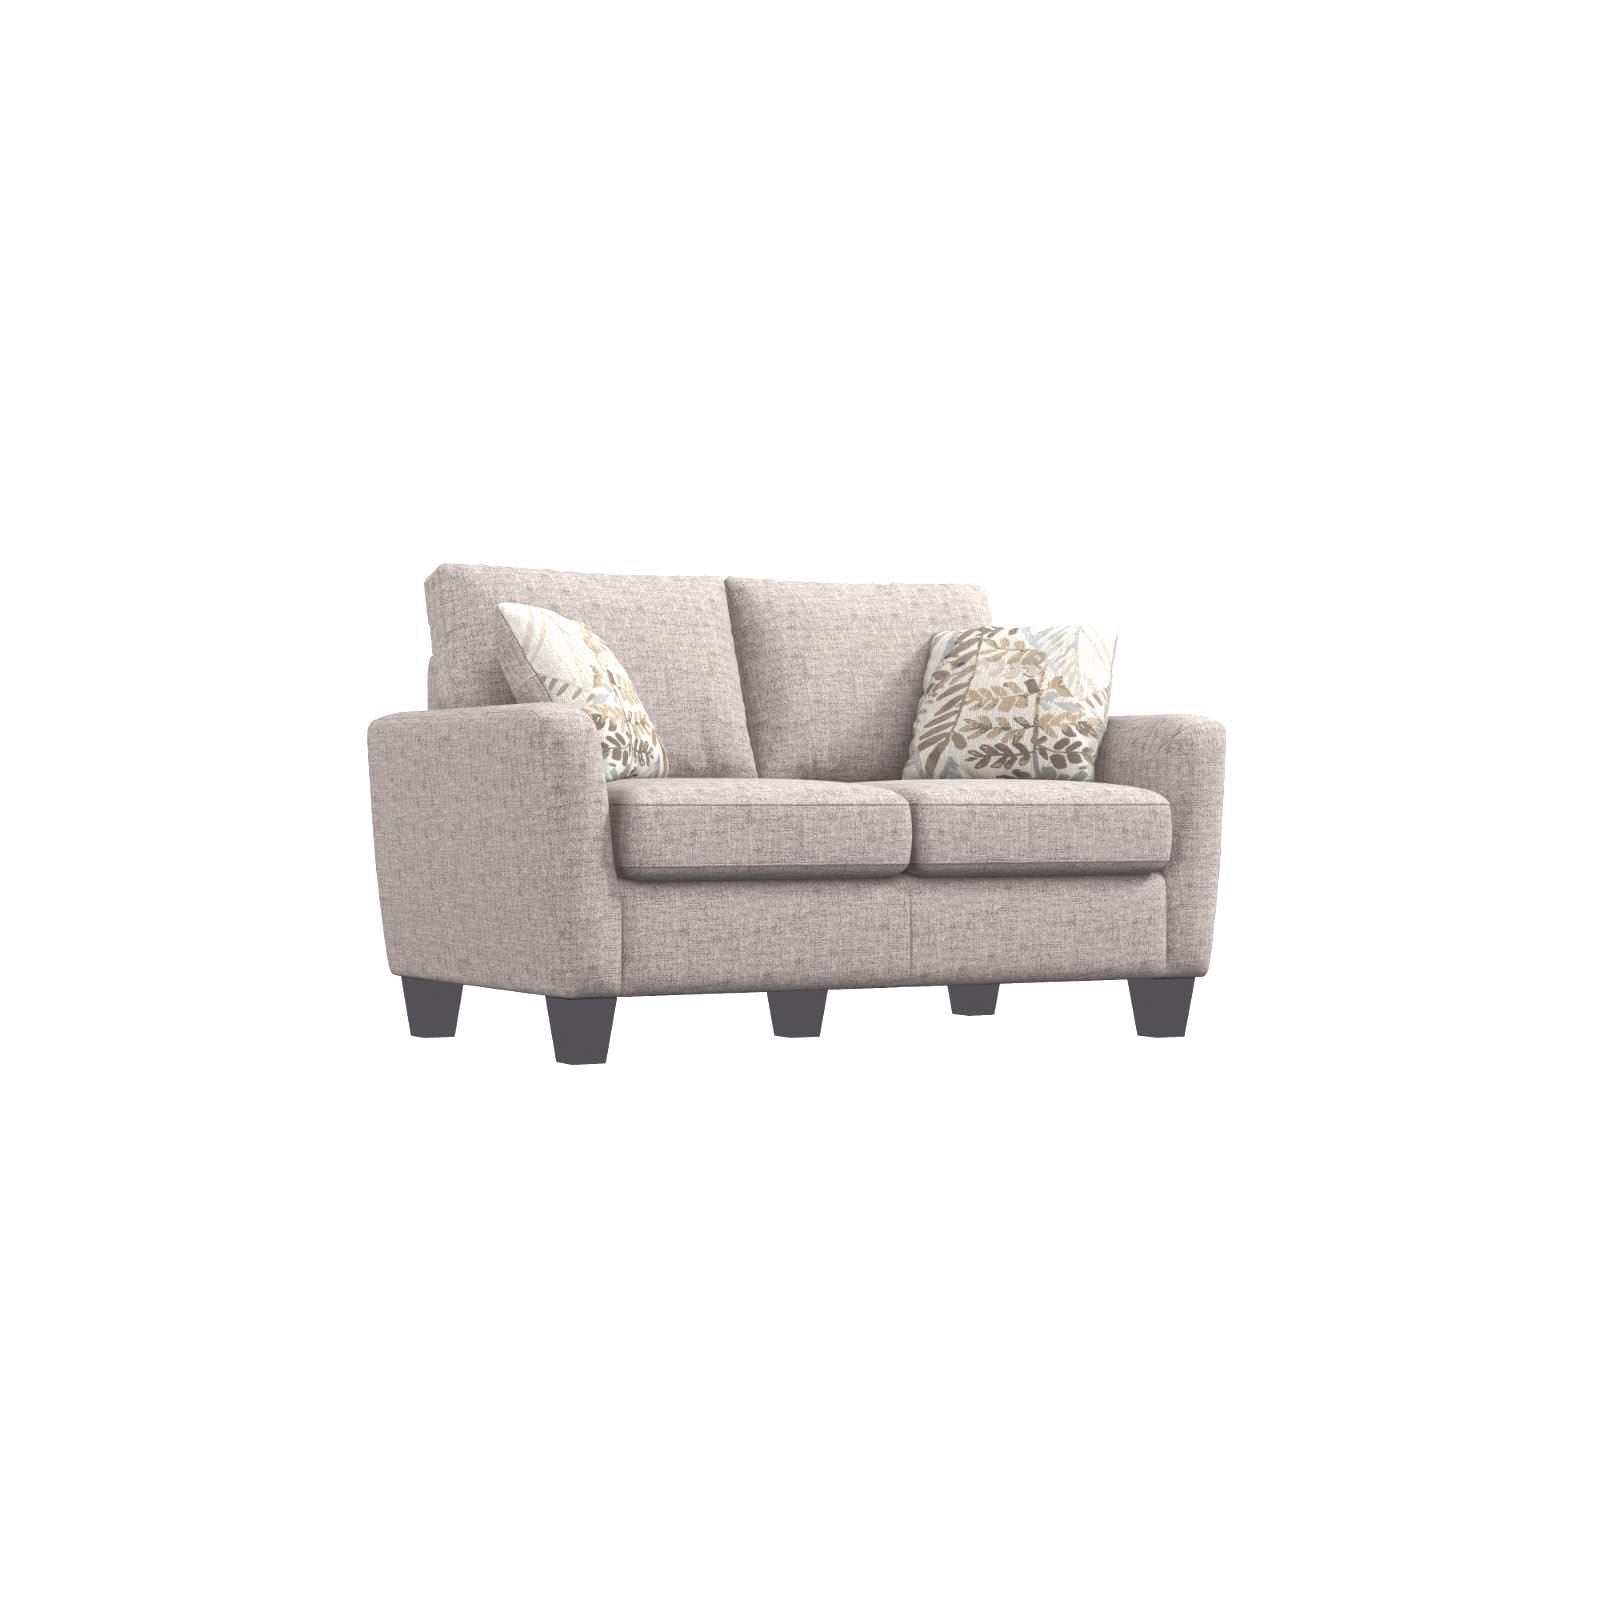 MB-2079 - 3-Seater Sofa w/ 2 Pillows - 47397